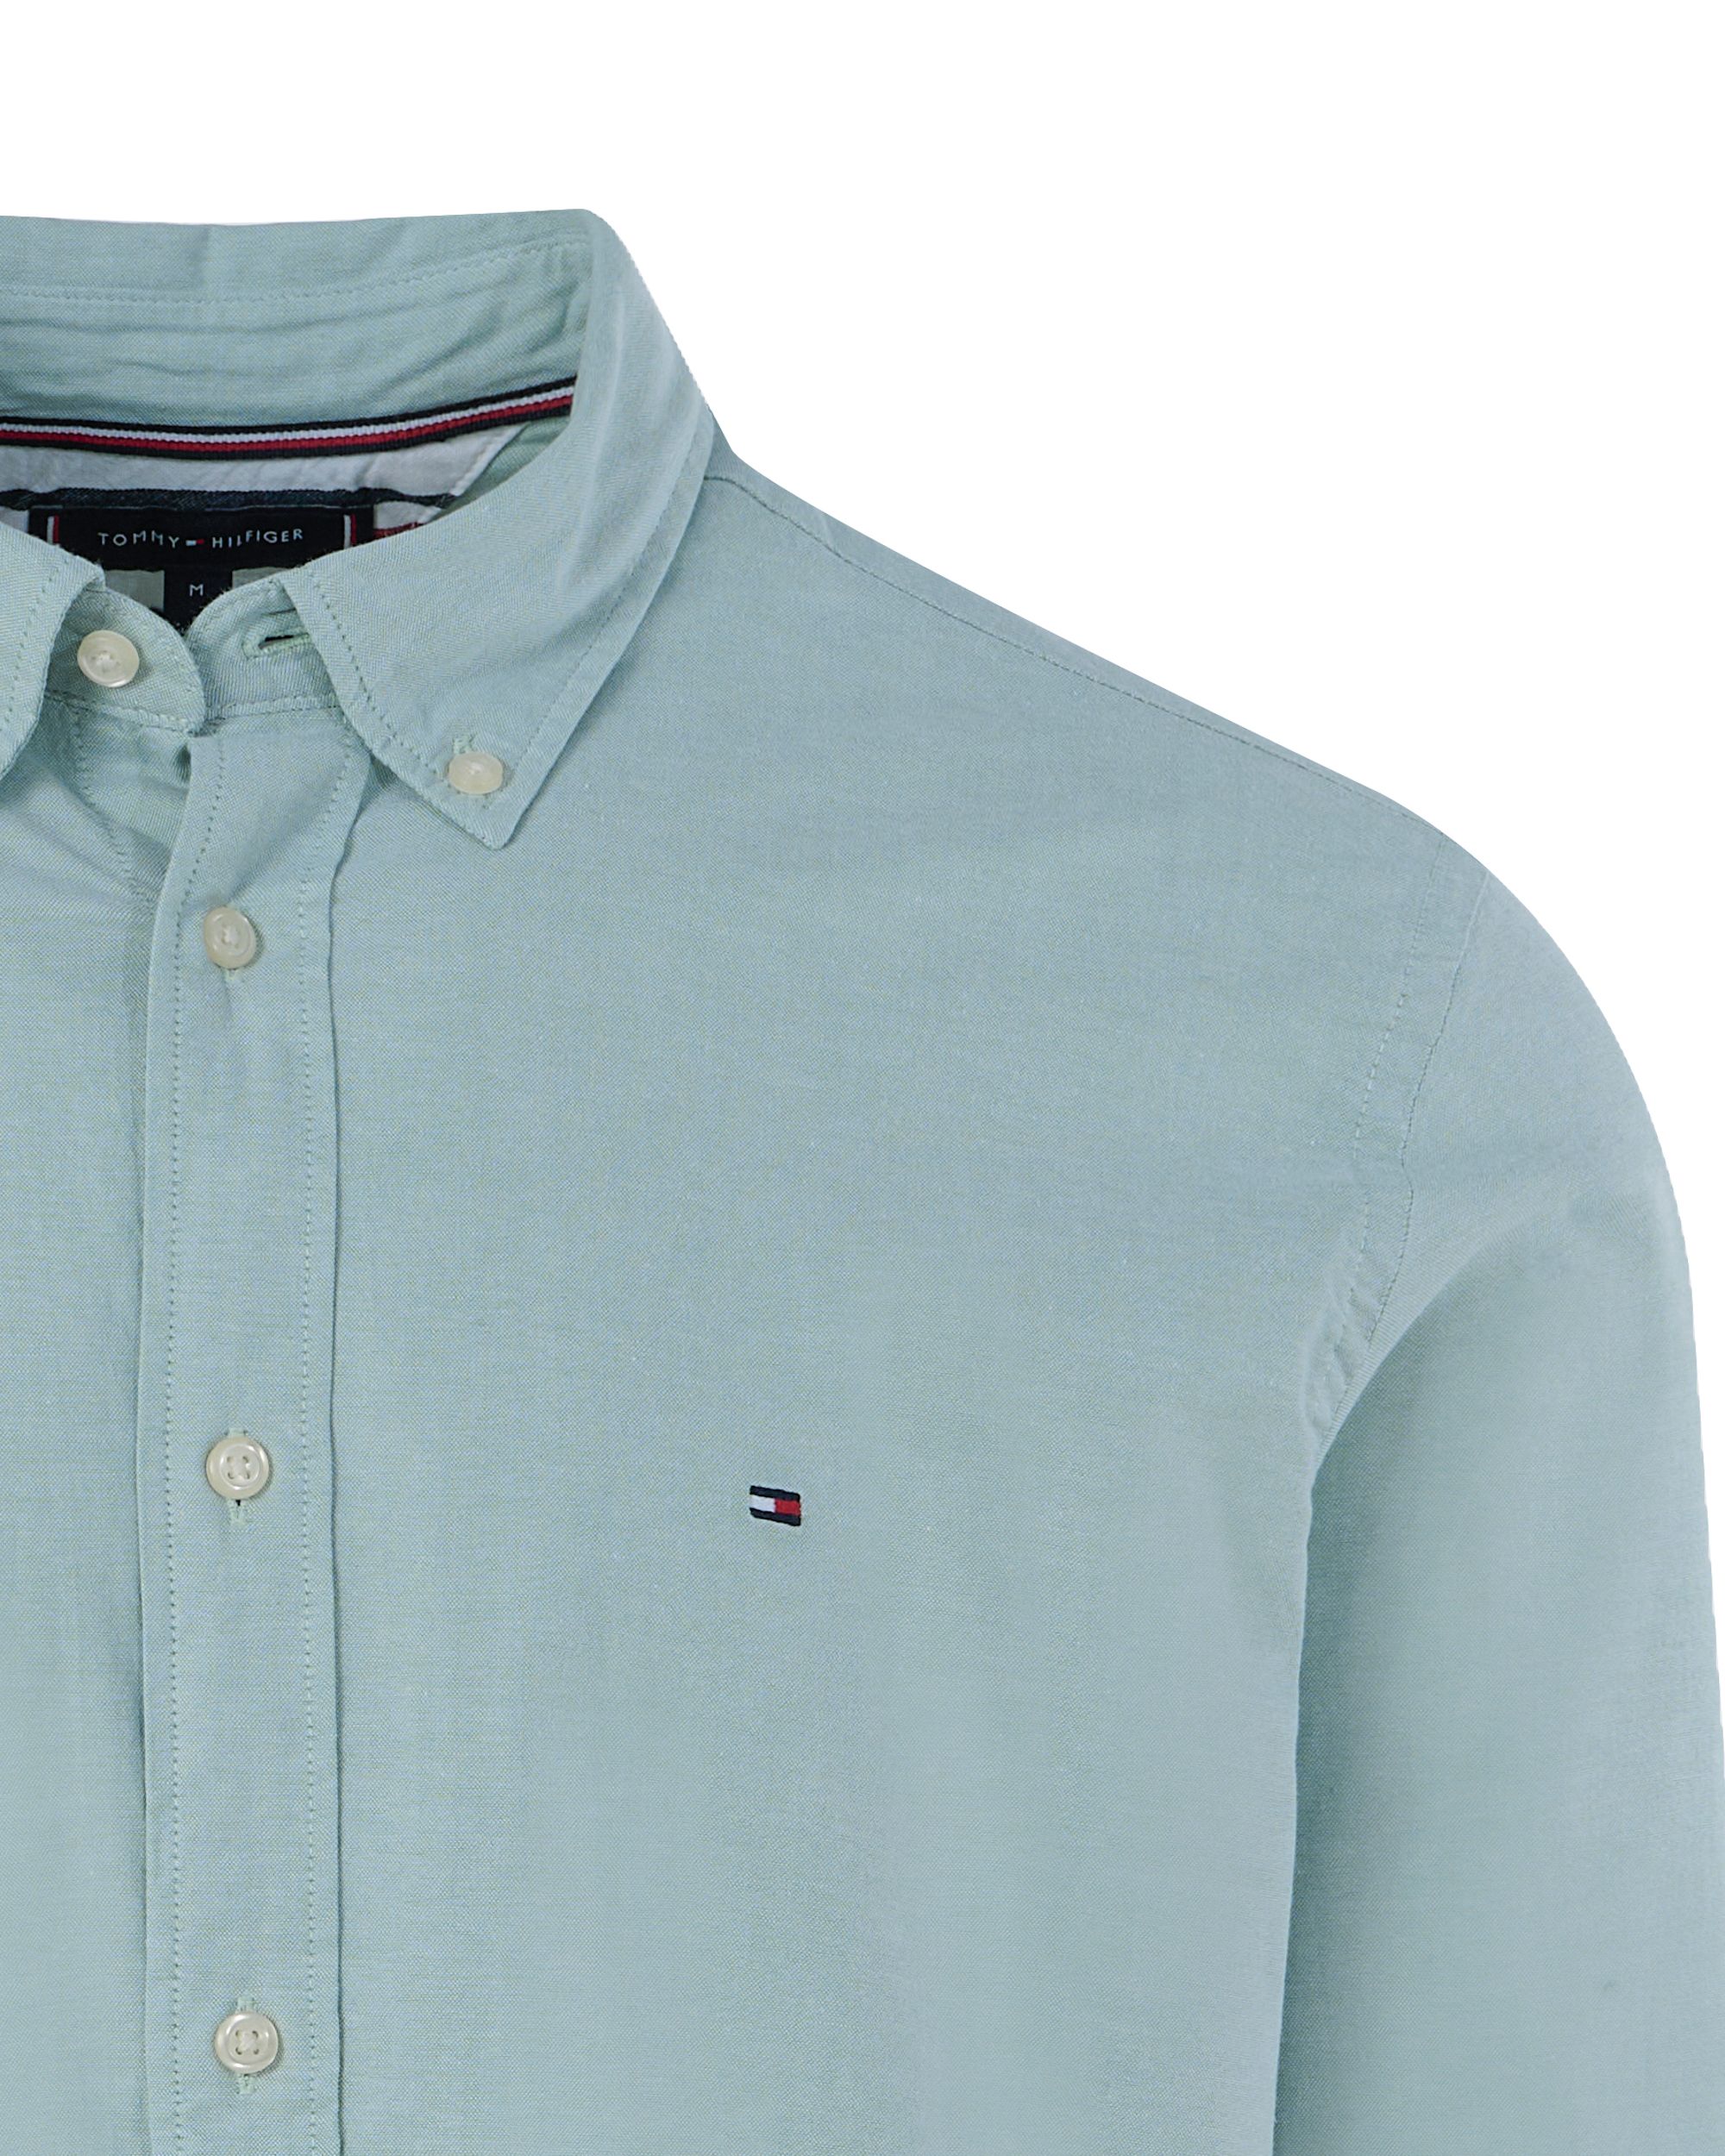 Tommy Hilfiger Menswear Casual Overhemd LM Groen 093019-001-L